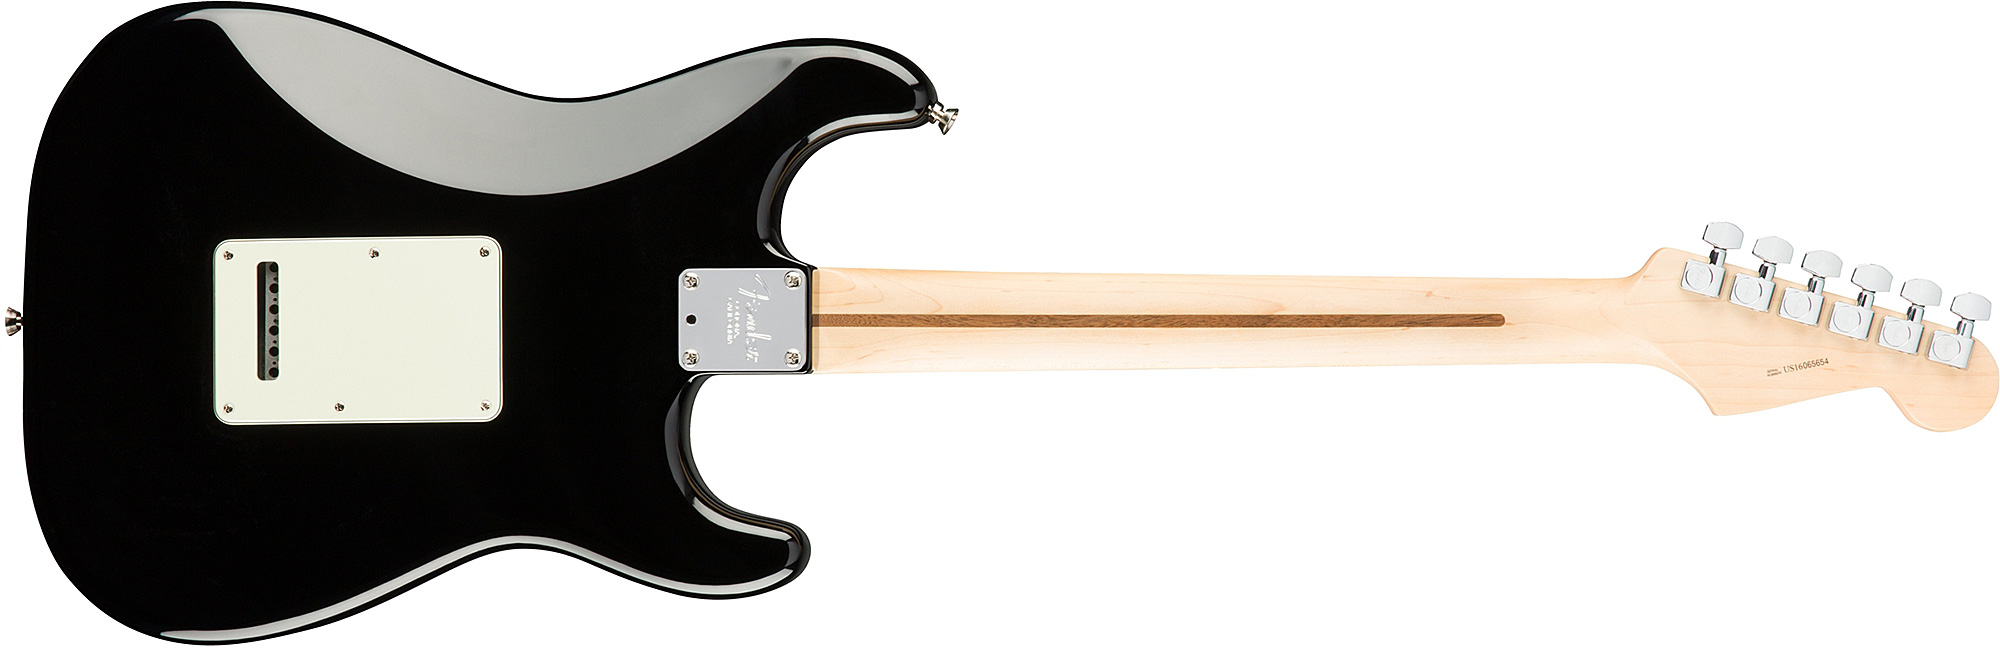 Fender Strat American Professional Lh Usa Gaucher 3s Rw - Black - Left-handed electric guitar - Variation 1